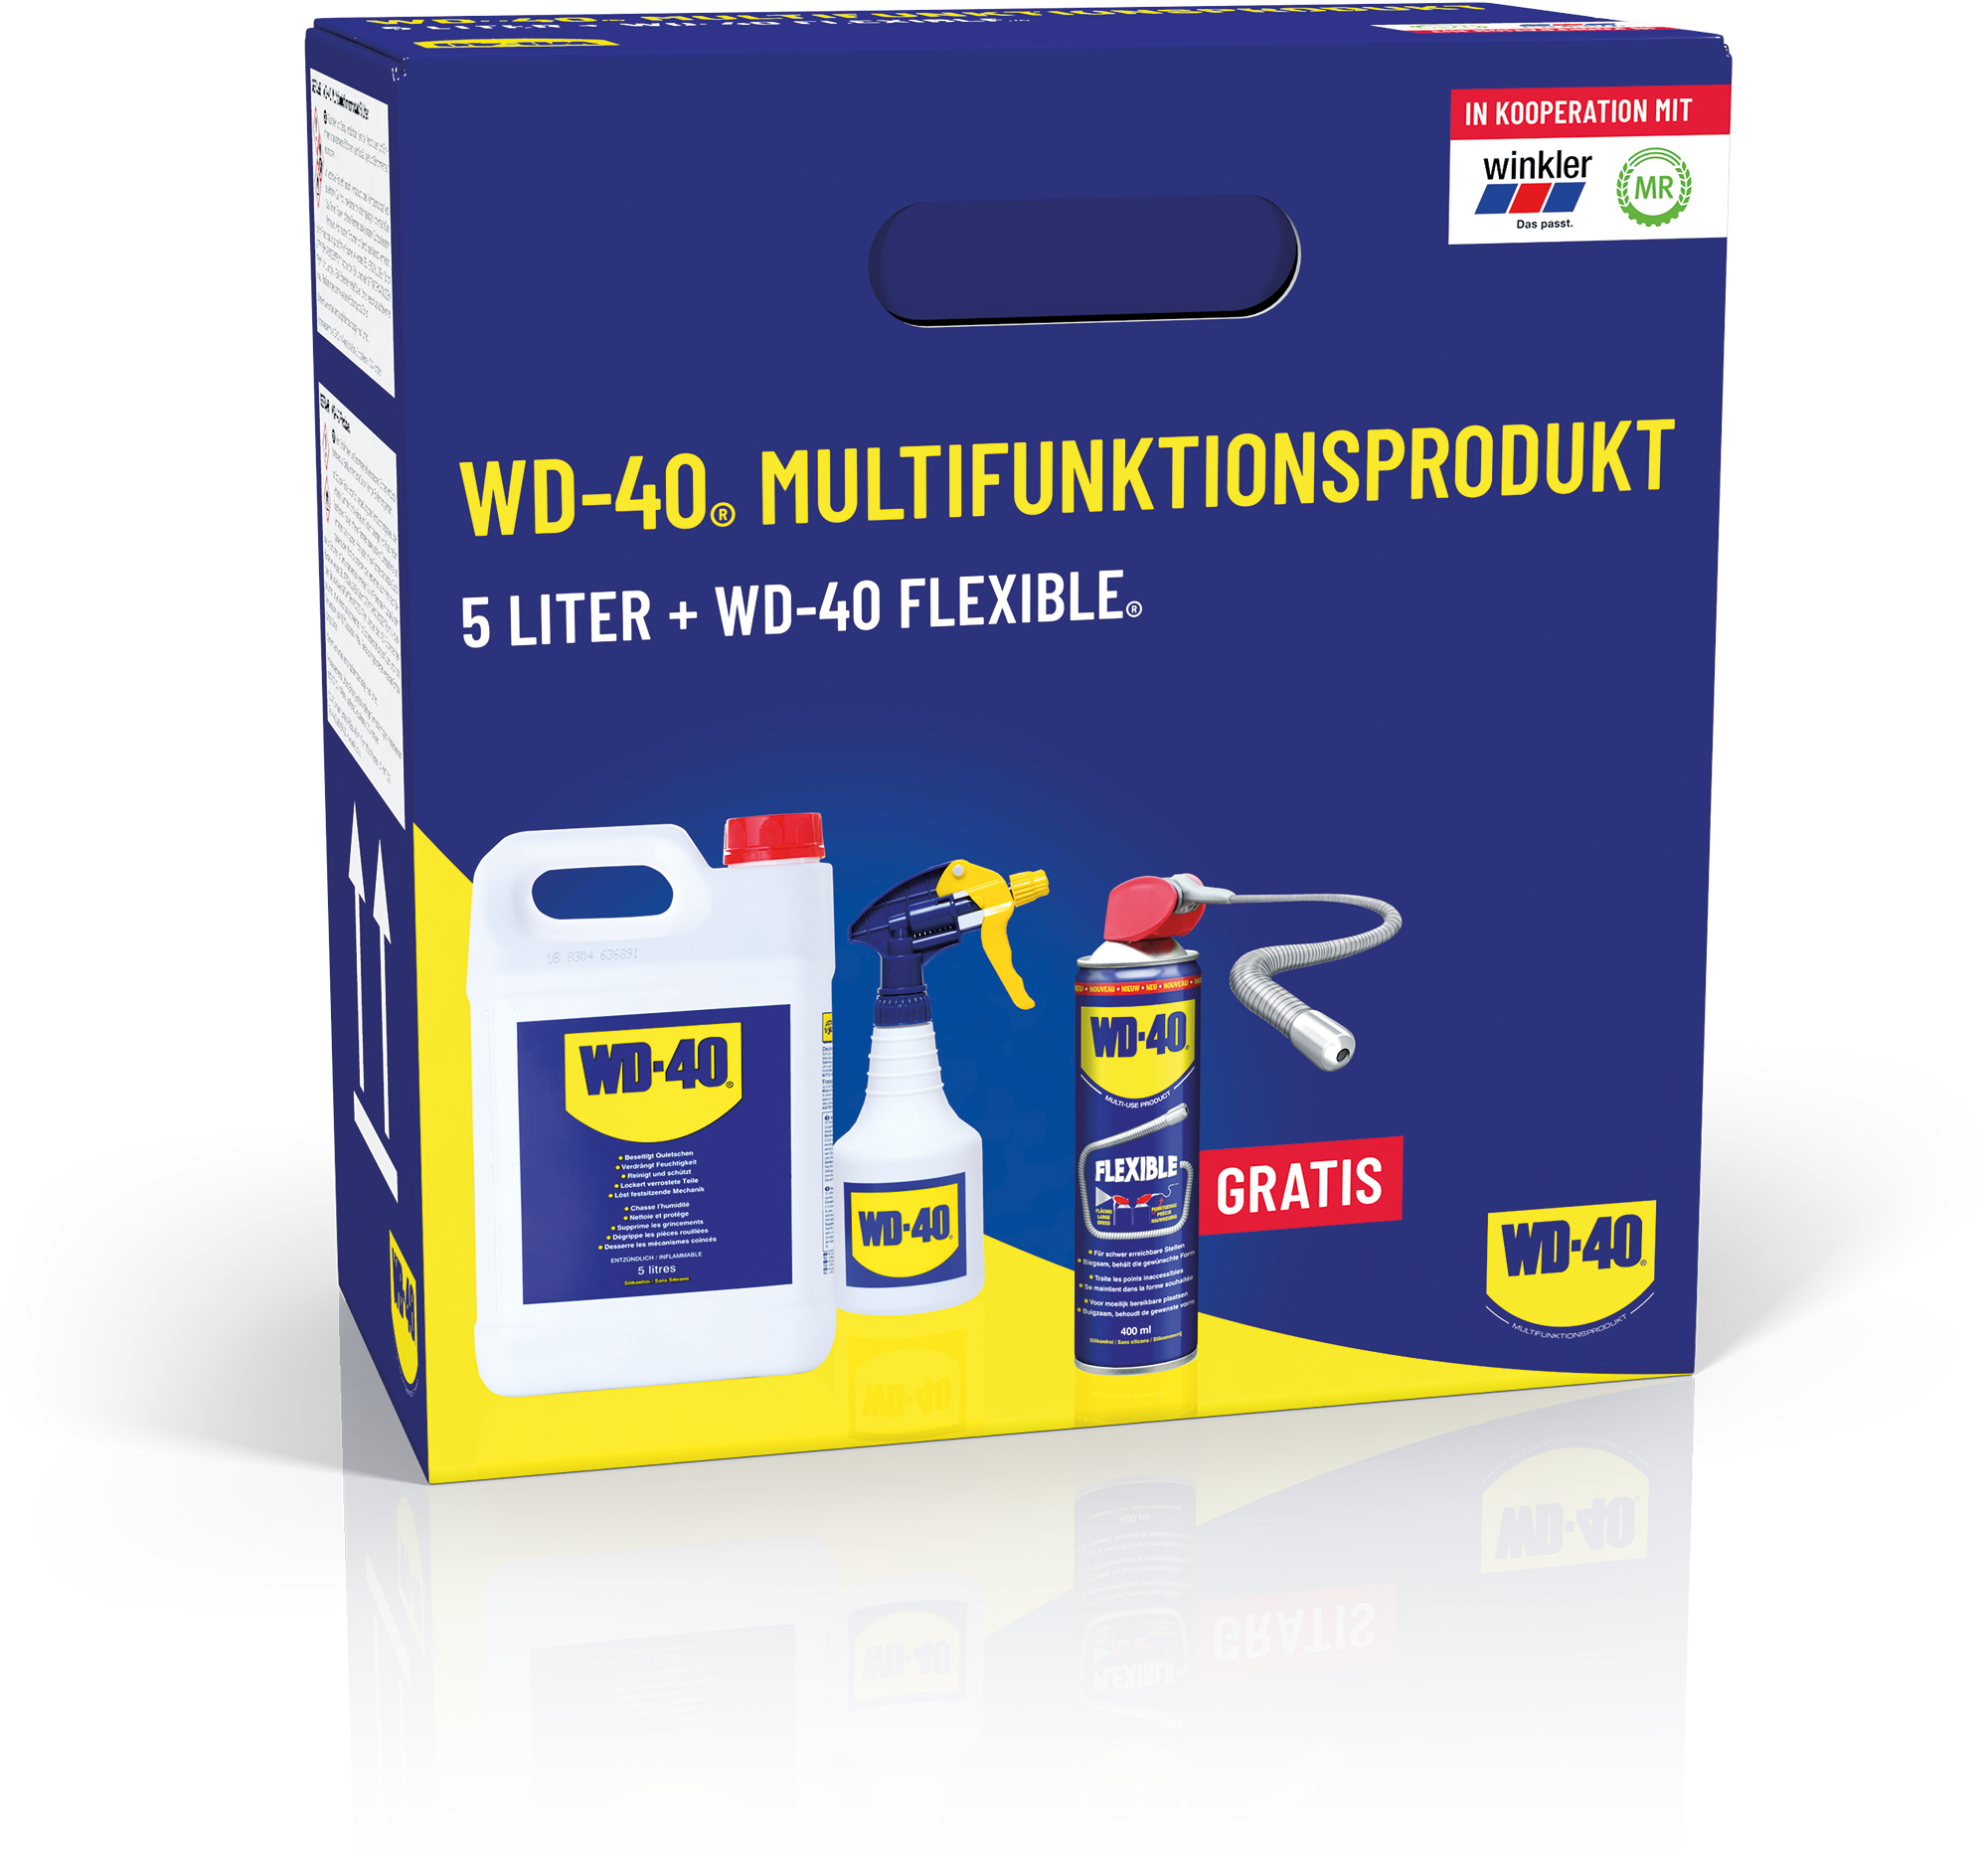 WD-40 Multifunktionsprodukt + Flexible